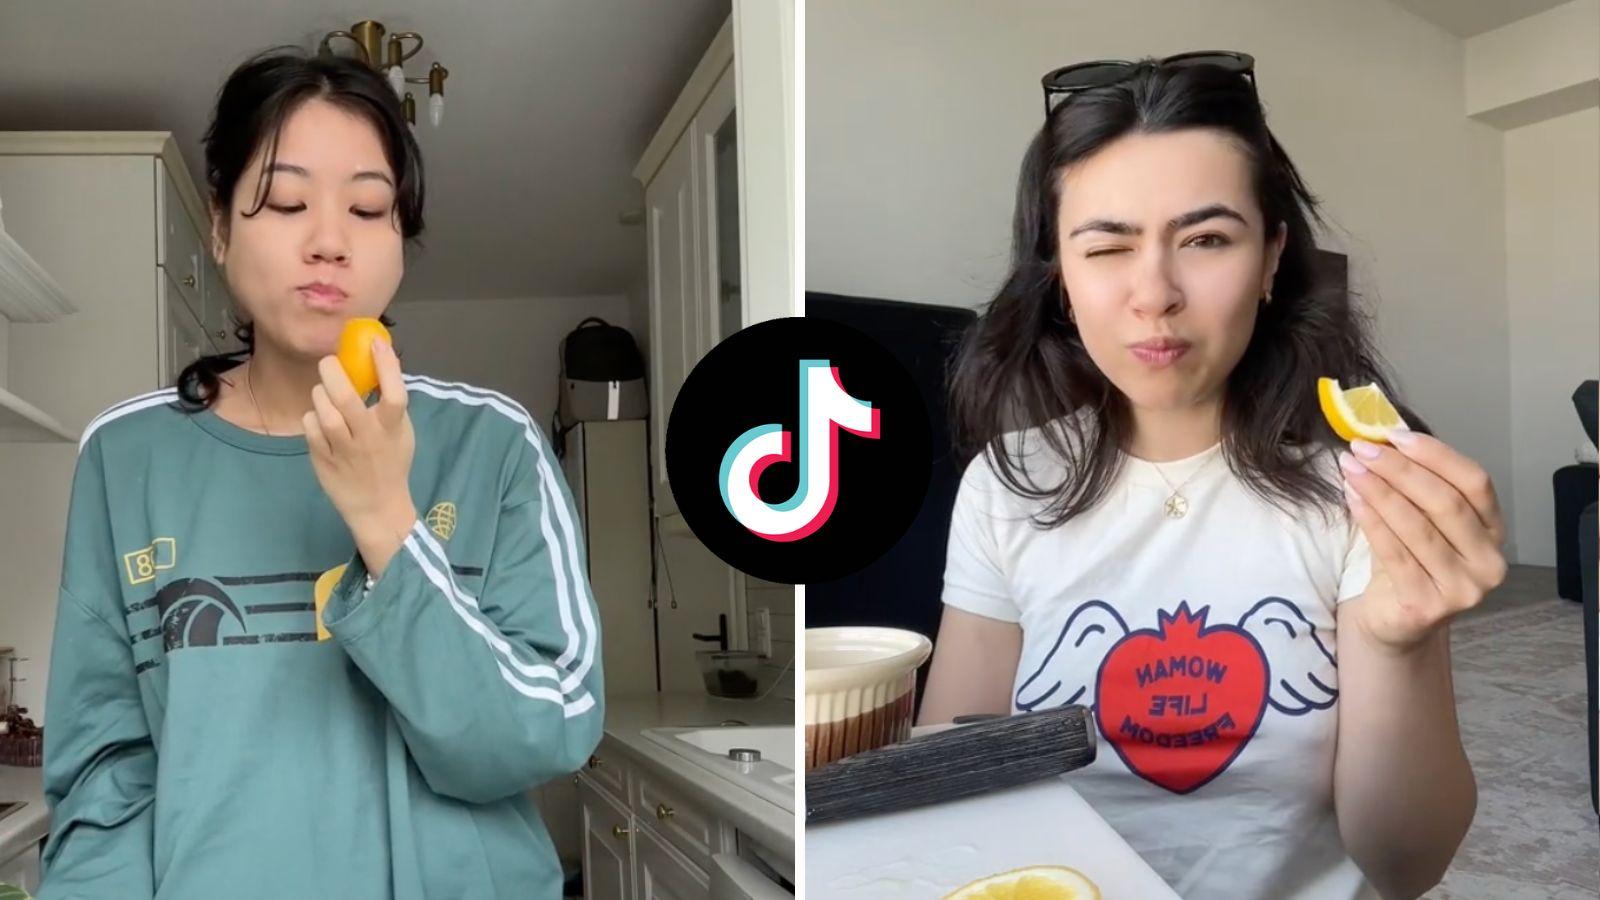 TikTokers eating whole lemons as part of a new TikTok trend